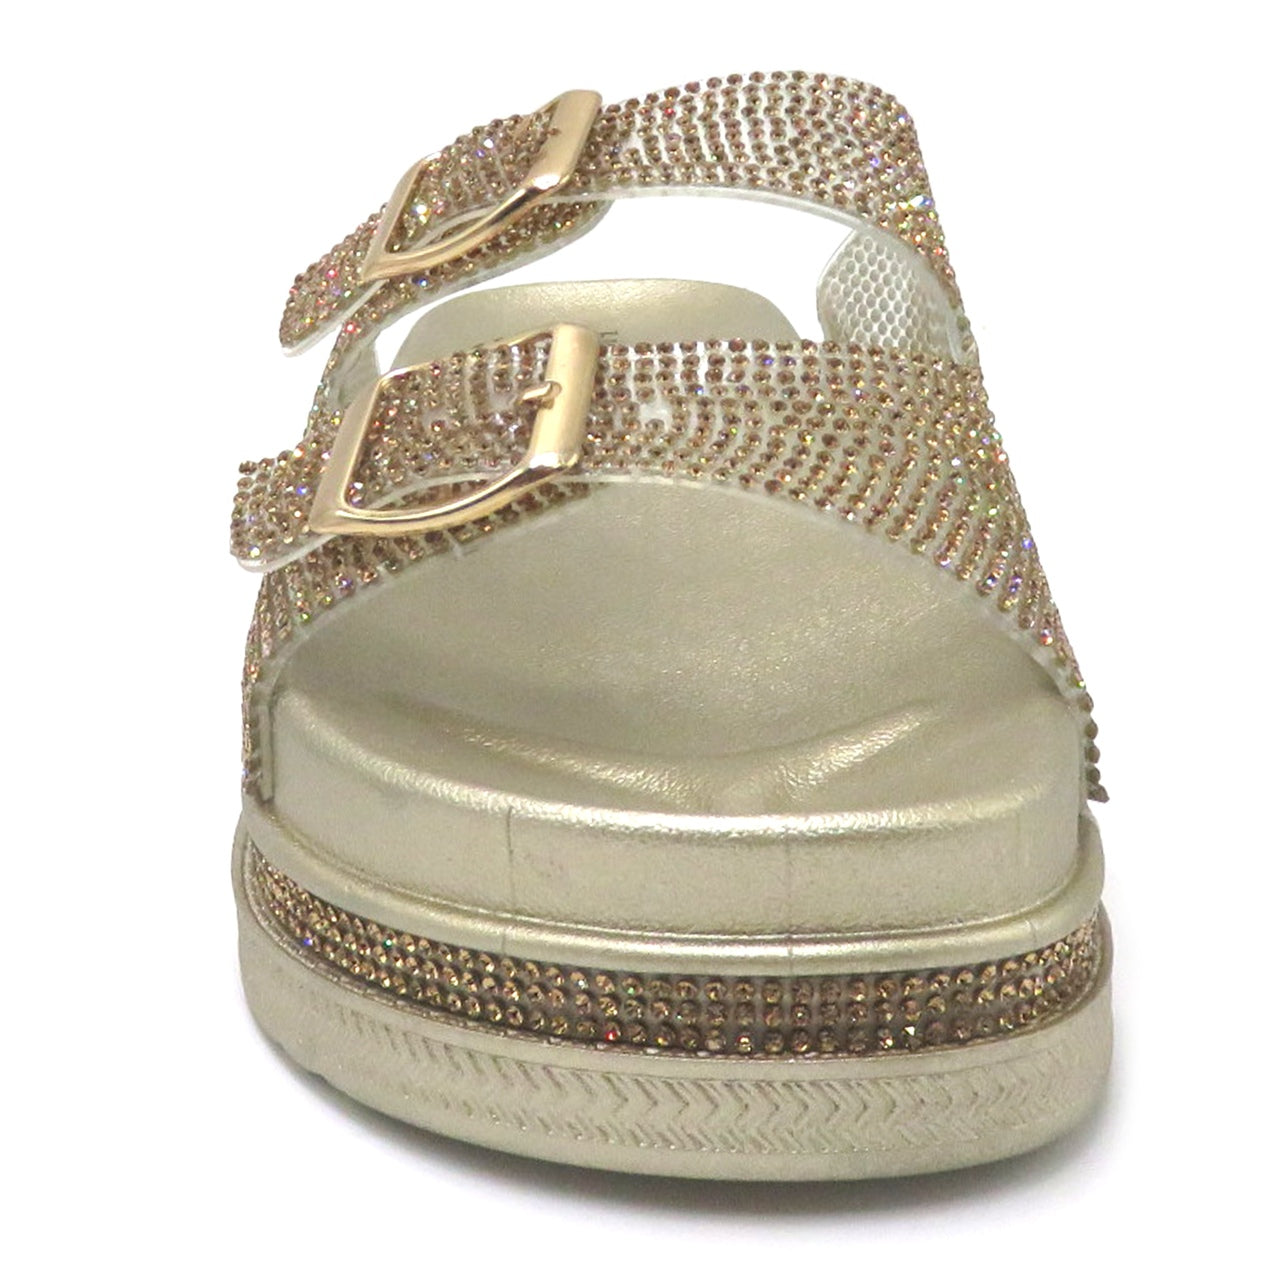 Pierre Dumas Glittzy Gold Sandals